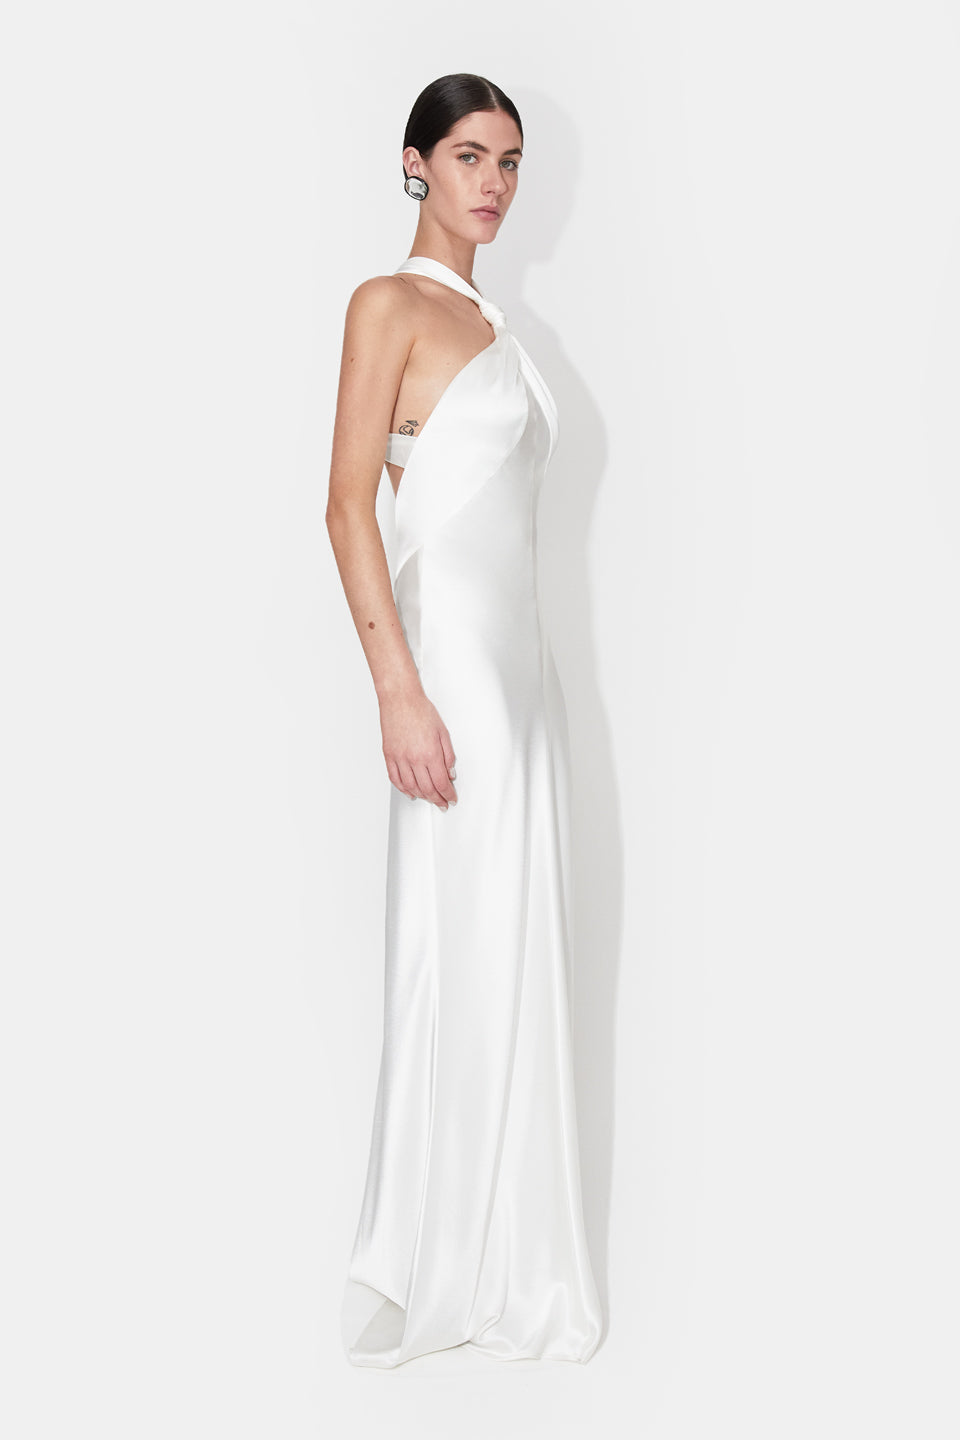 Bridal Santorini Gown in White